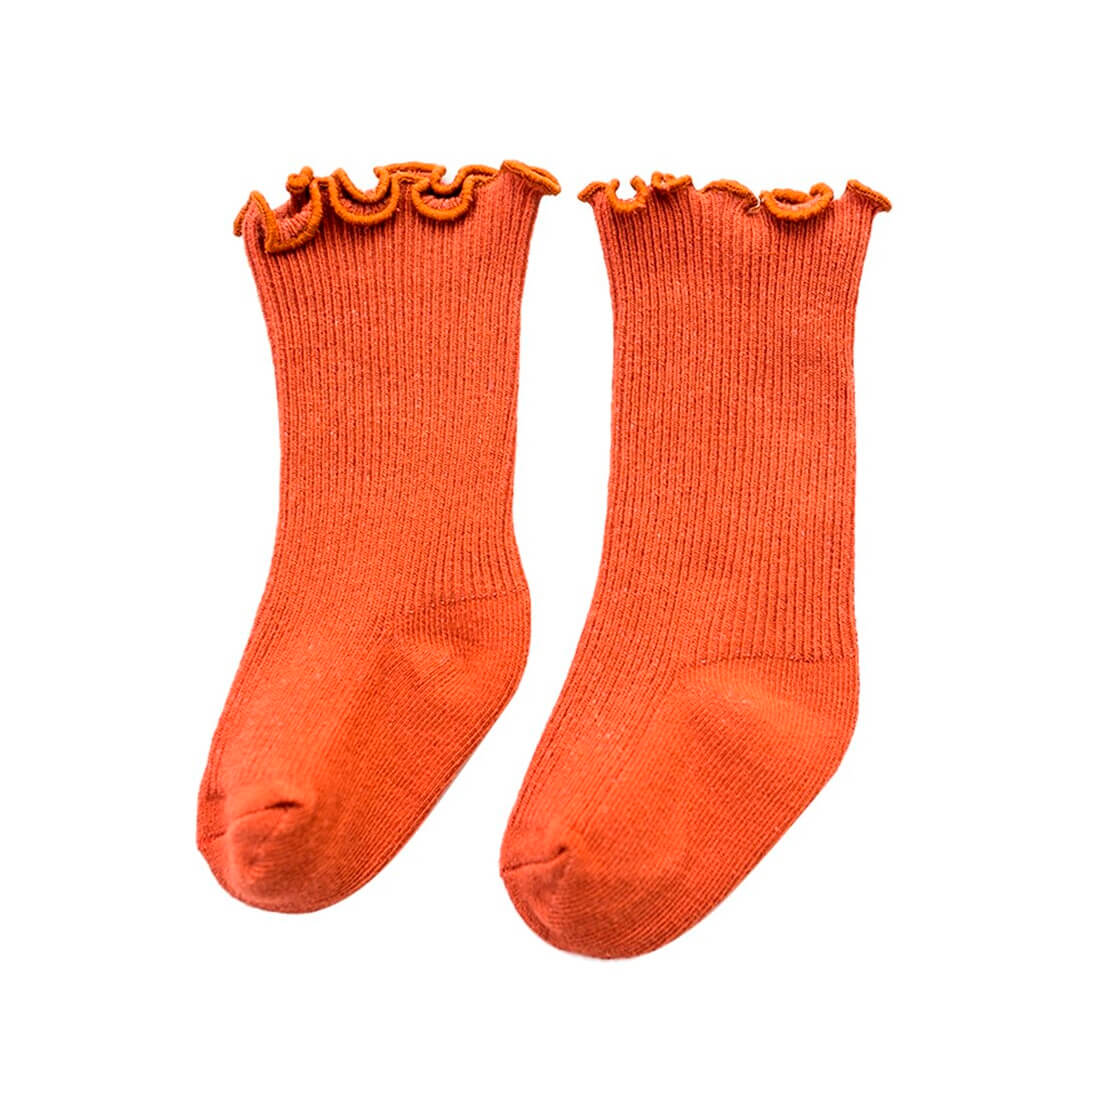 Solid Ruffled Socks Orange 0-12 M 